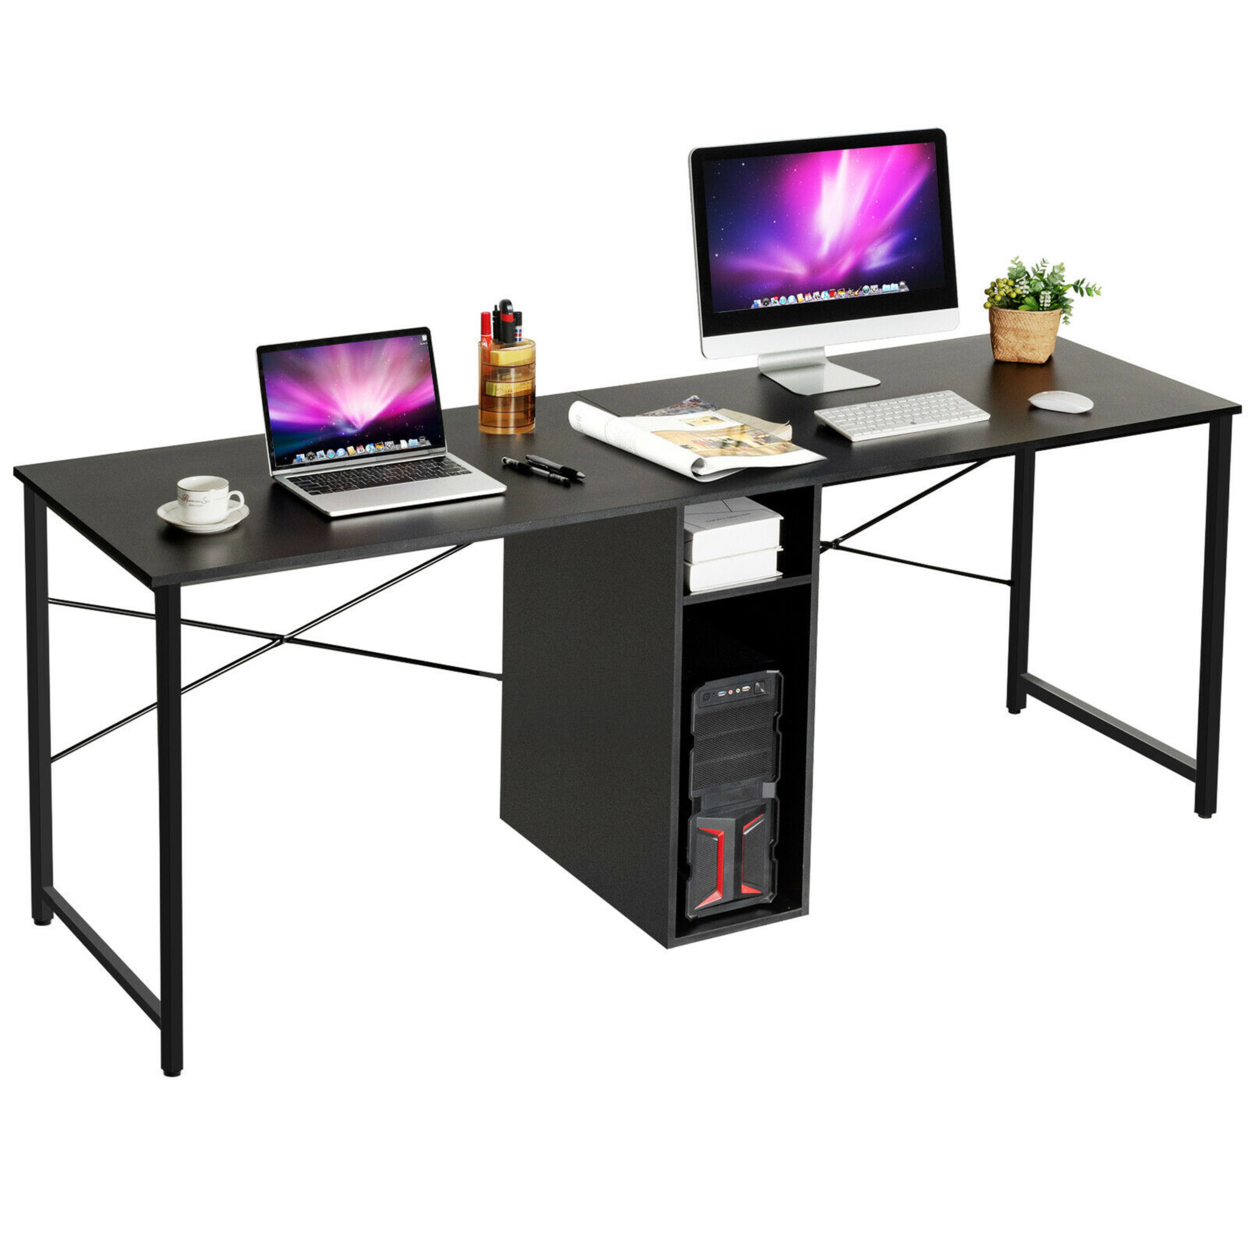 2 Person Computer Desk Double Workstation Office Desk W/ Storage - Black